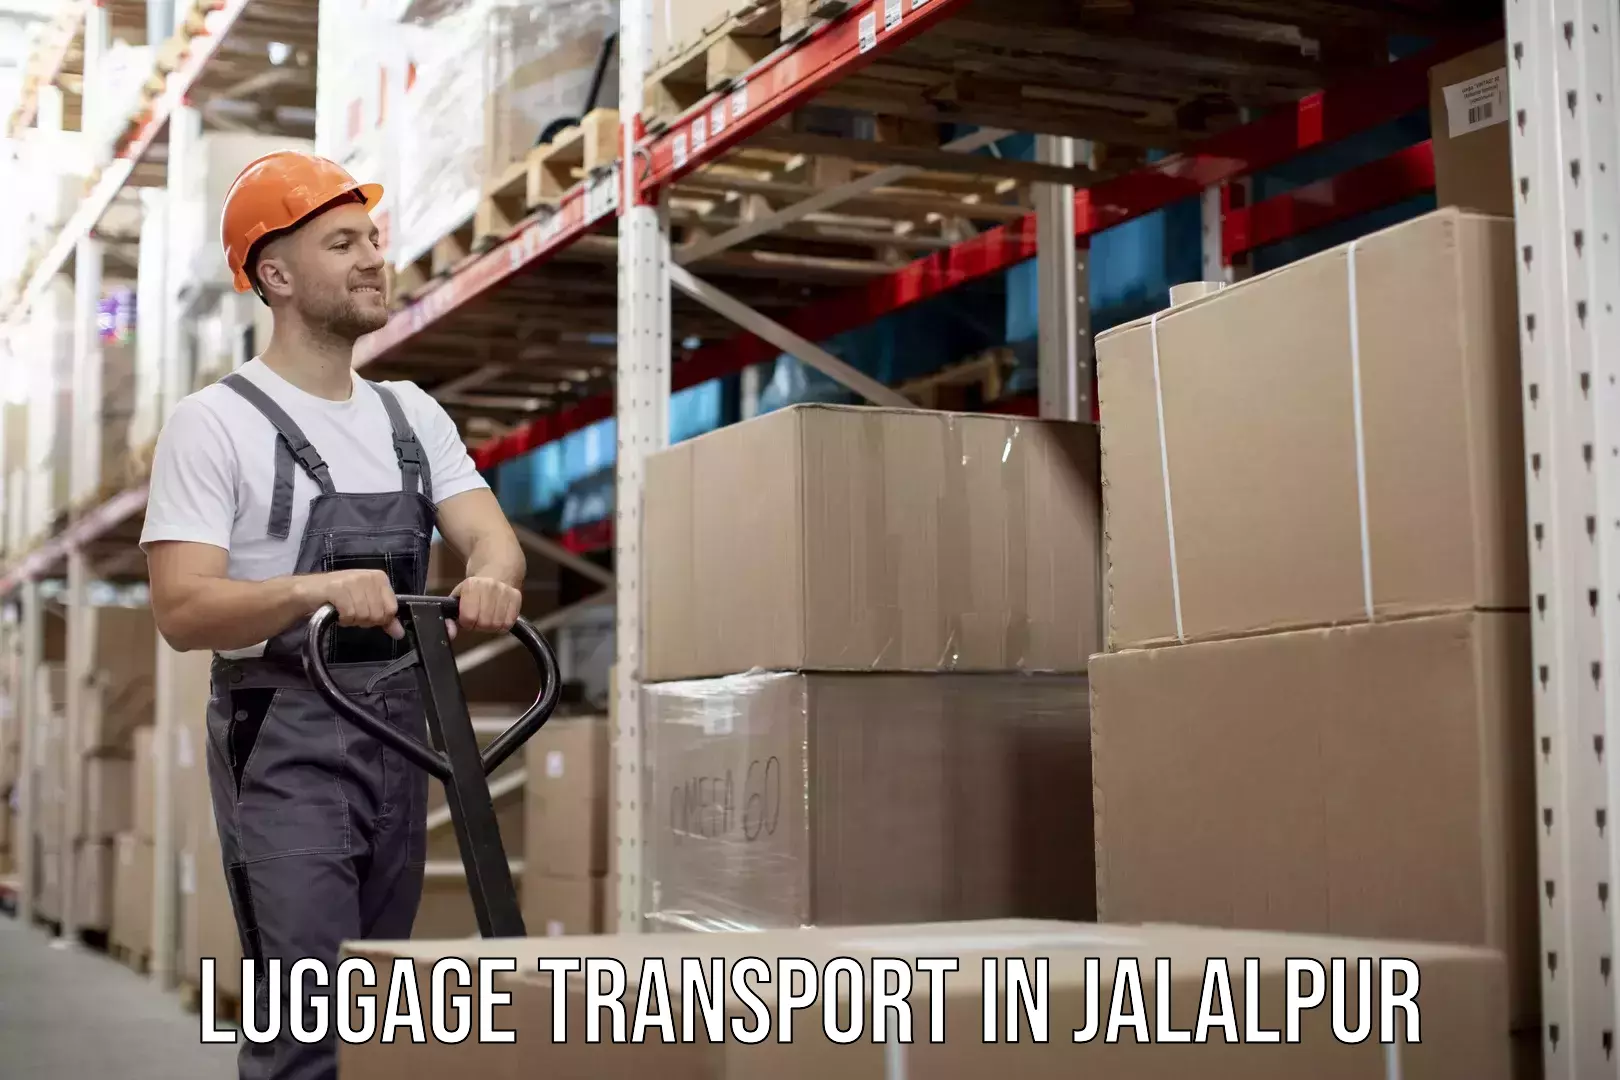 Luggage shipment logistics in Jalalpur